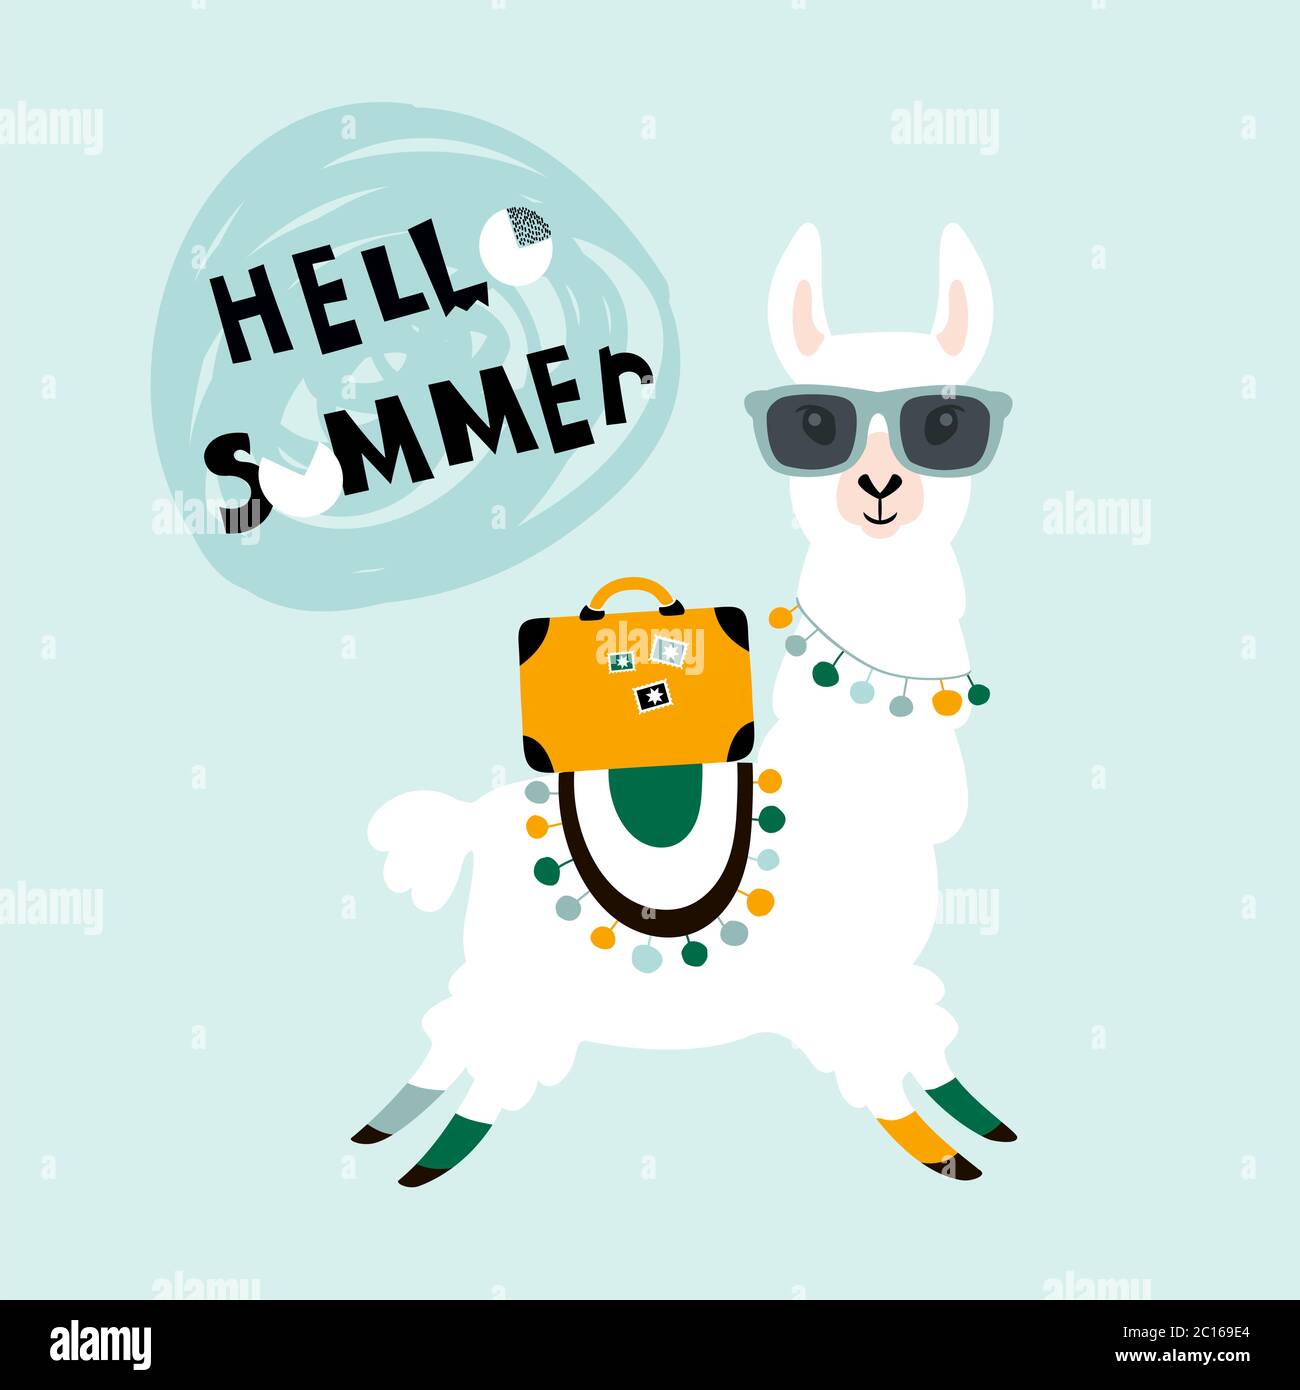 Llama Alpaca. Carte Hello Summer. Illustration vectorielle Illustration de Vecteur